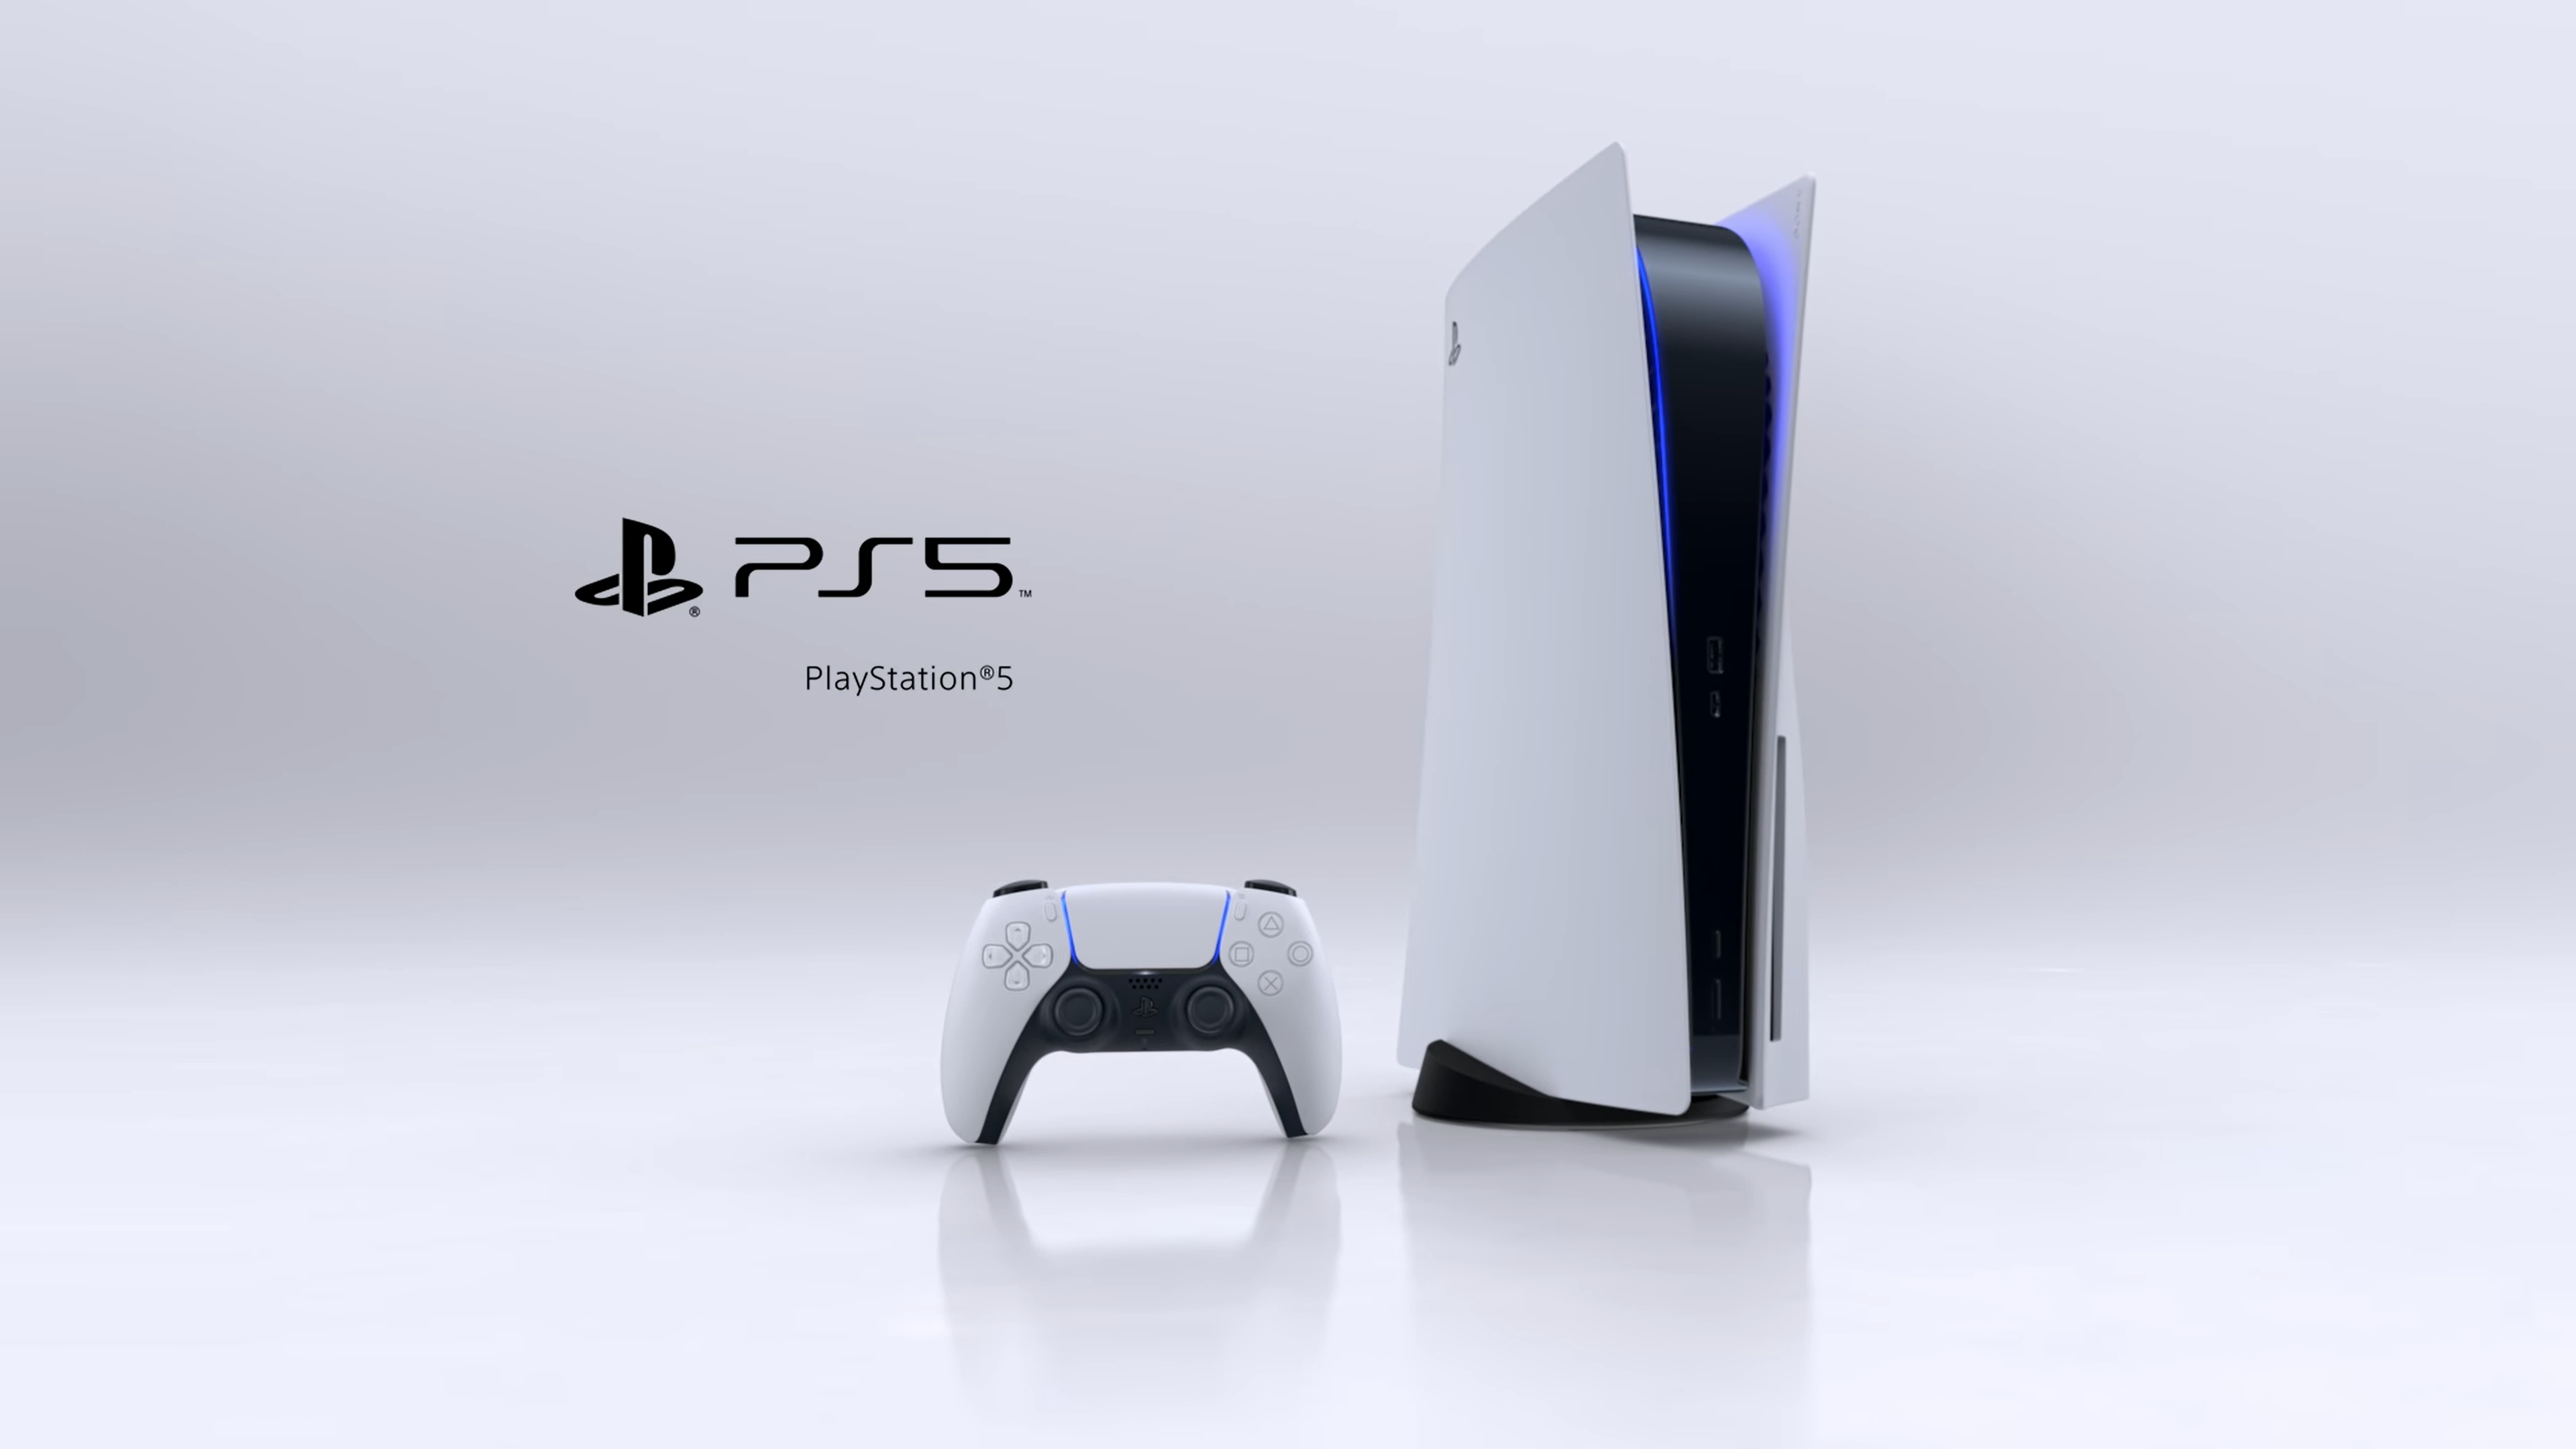 Sony Playstation 5 Ps5 825gb Disco + Ea Sports Fc 2024